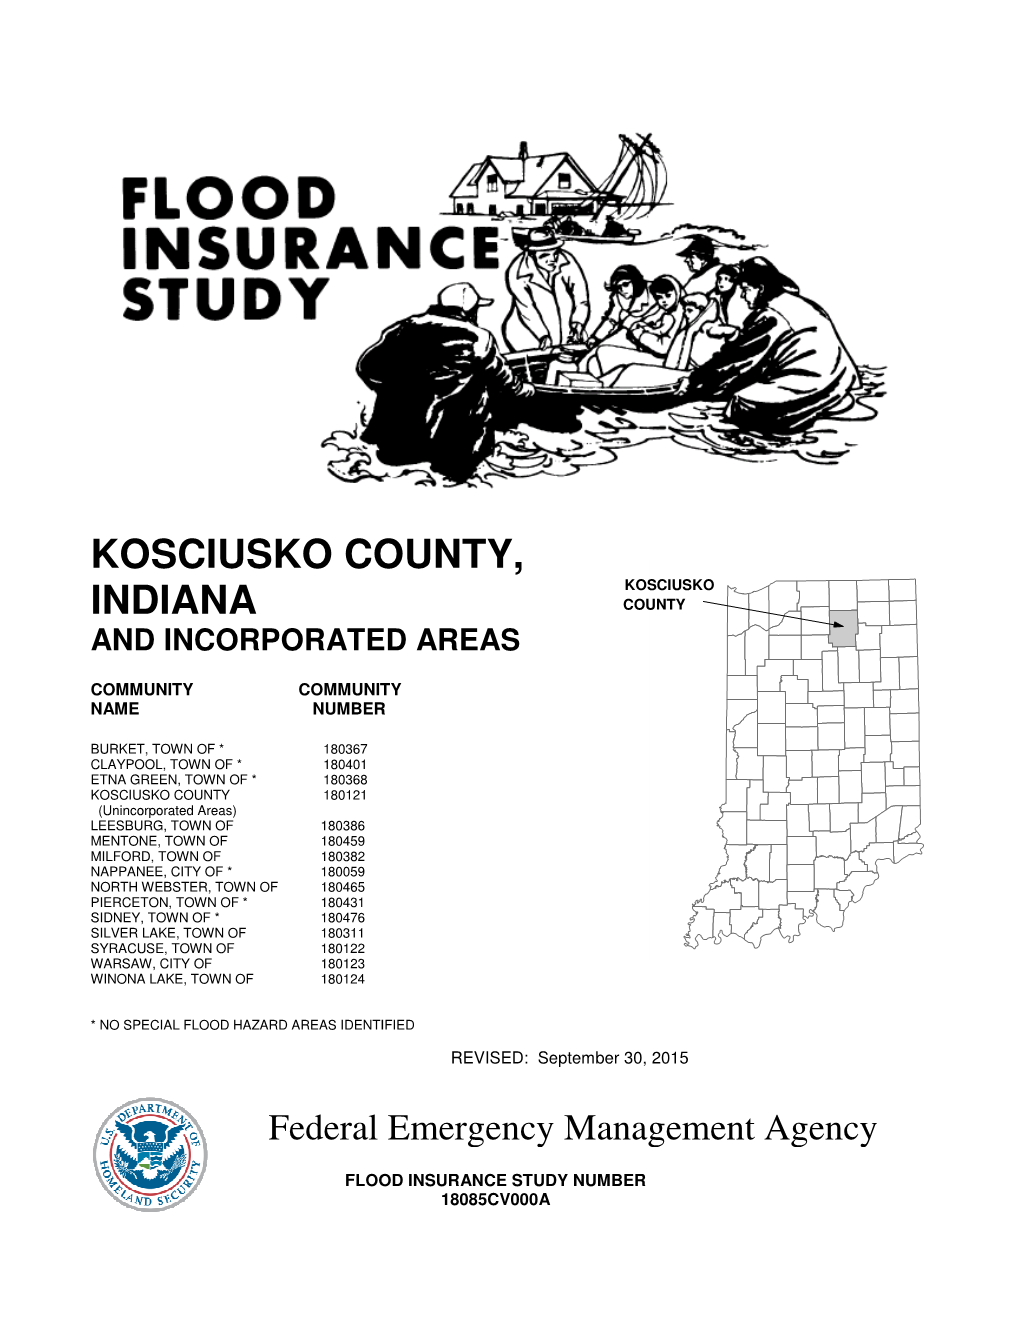 Kosciusko County, Indiana and Incorporated Areas